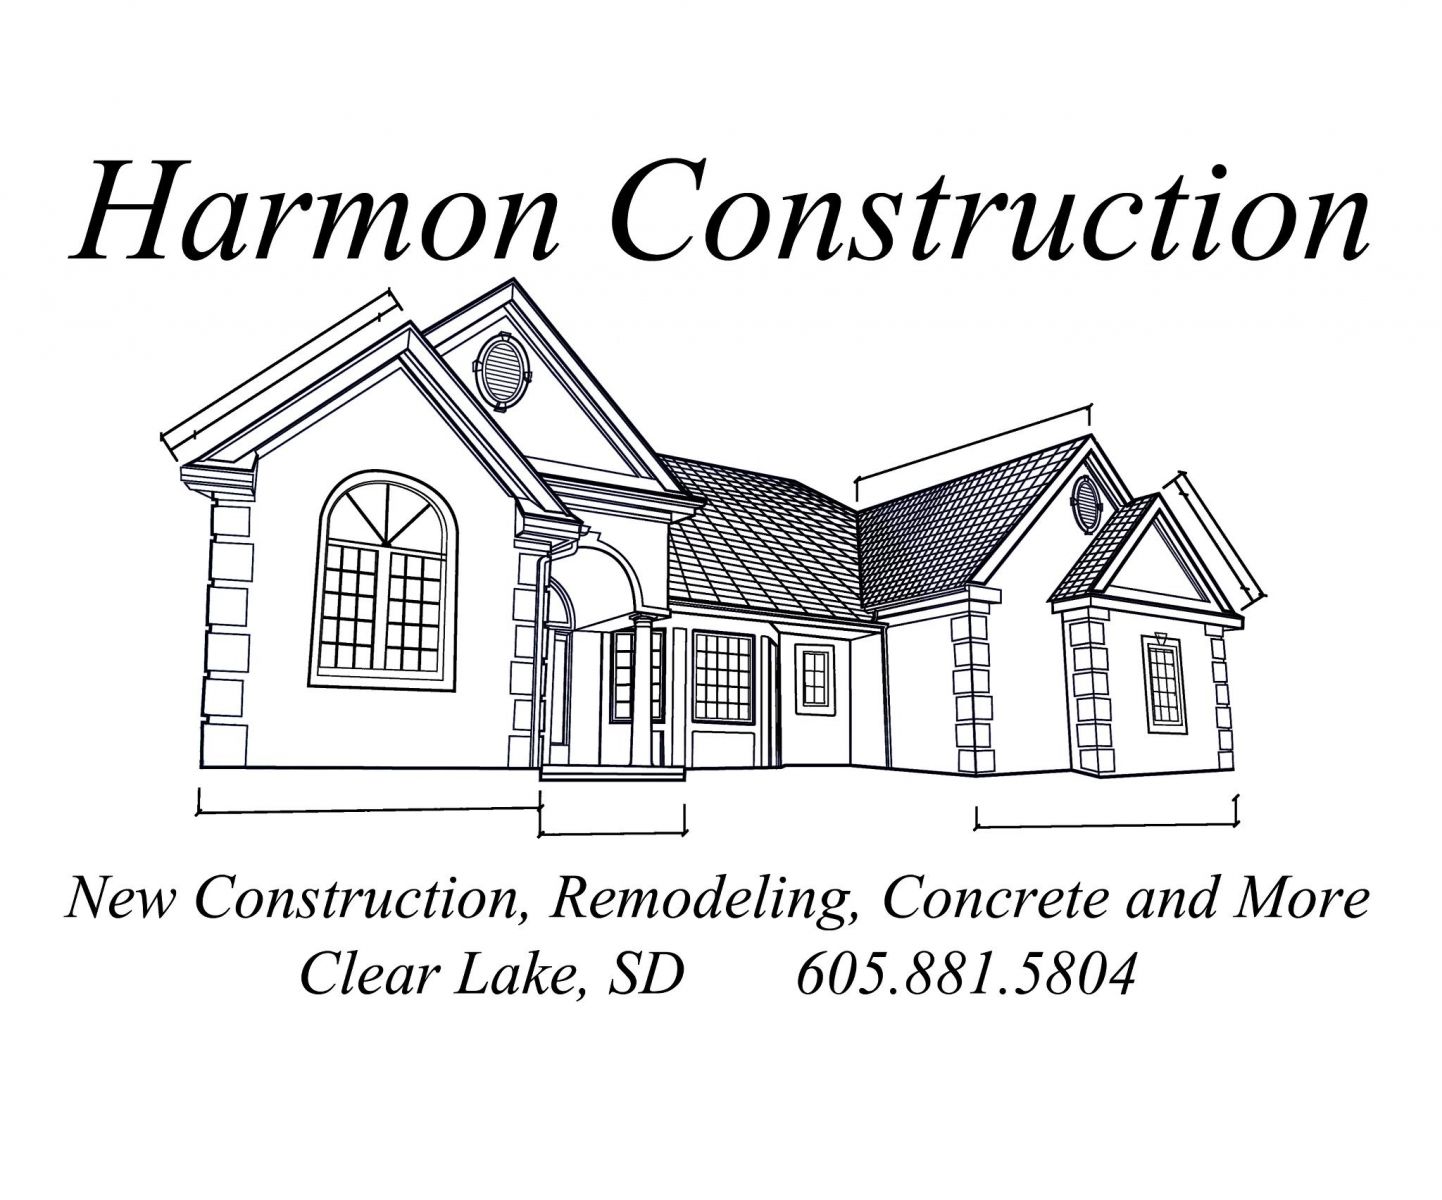 Harmon Construction's Image